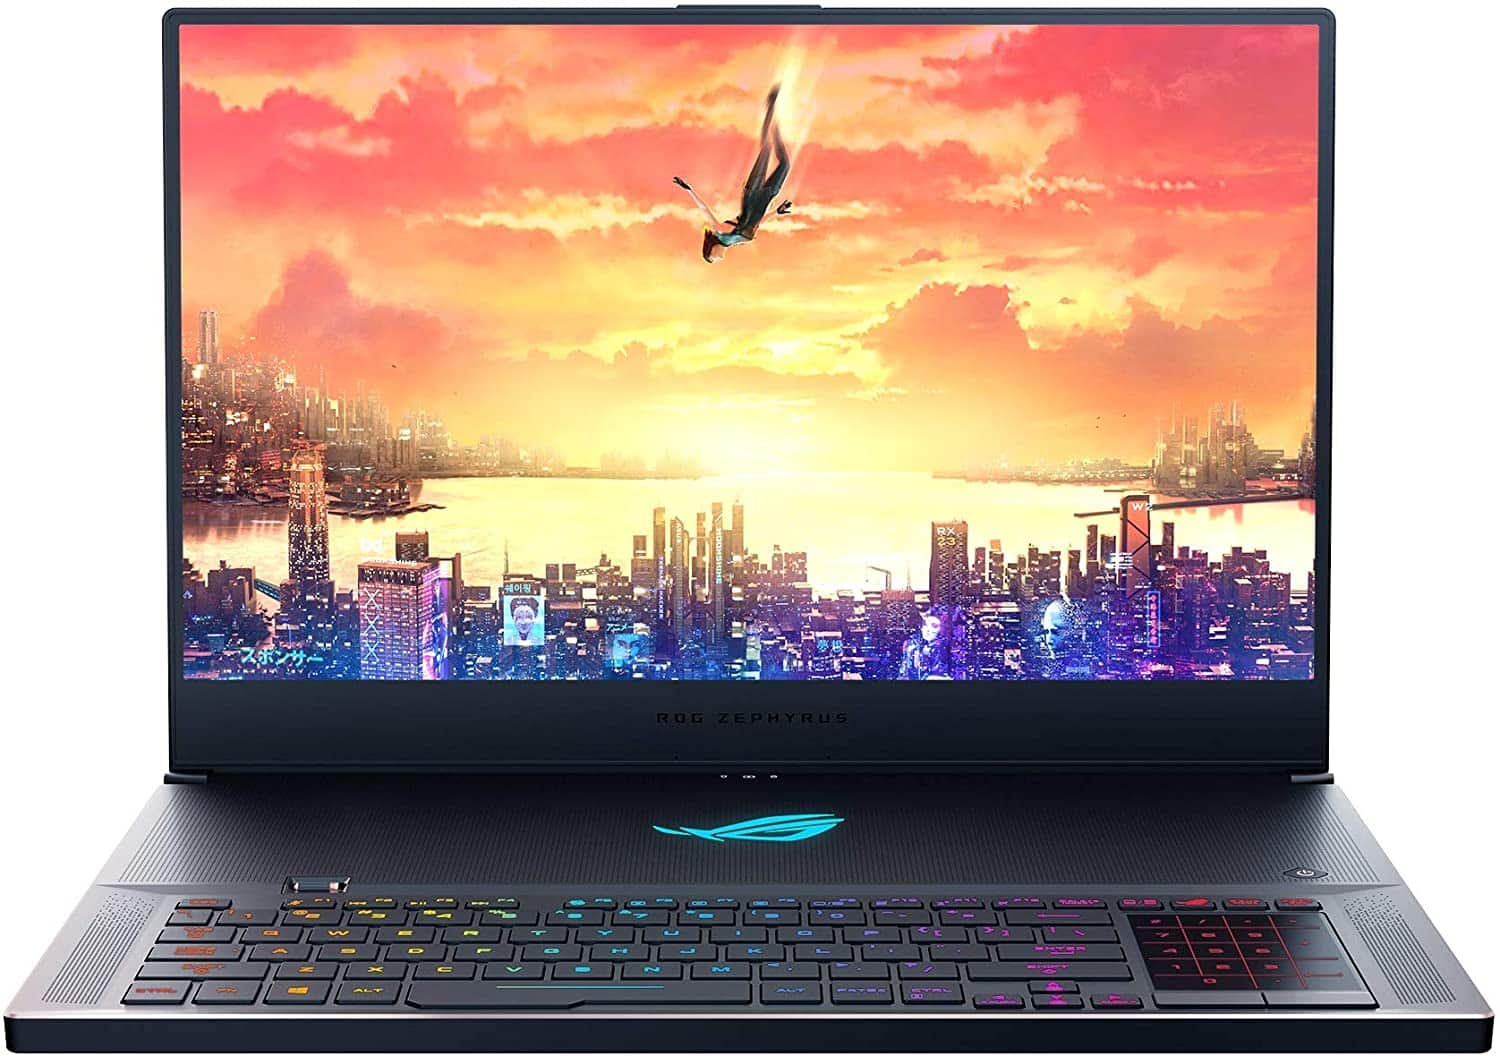 ASUS ROG Zephyrus S GX701 Gaming Laptop, 17.3” 144Hz Pantone Validated Full HD IPS, GeForce RTX 2080, Intel Core i7-8750H CPU, 16GB DDR4, 1TB PCIe Nvme SSD